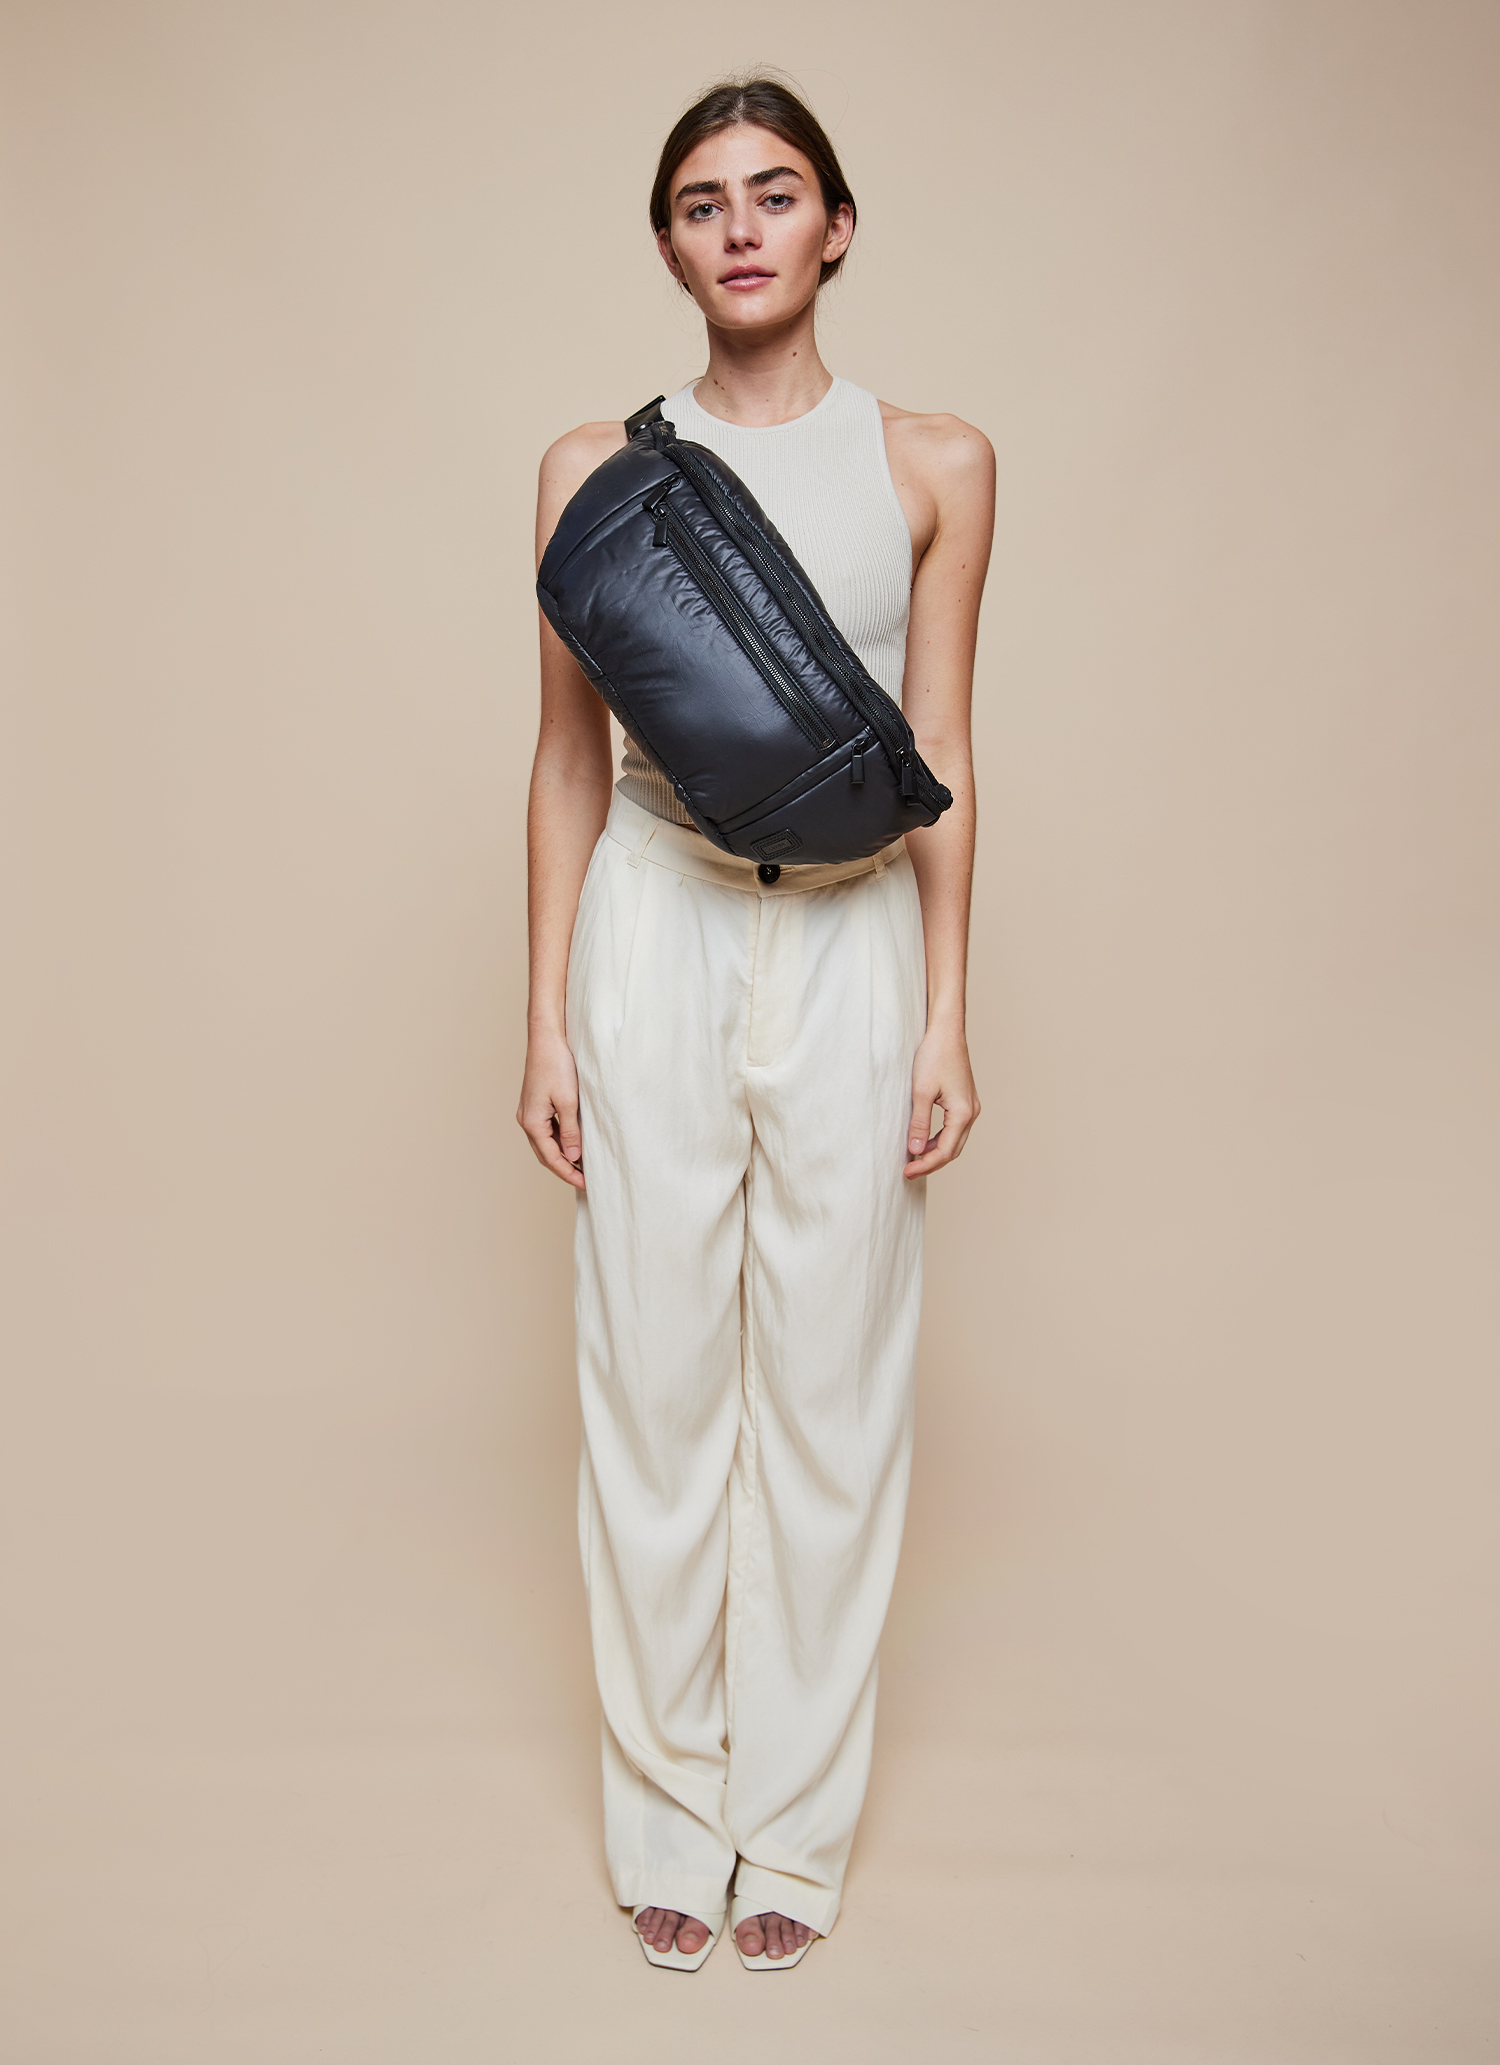 Alto Velvet  Caraa - Luxury Sports Bags